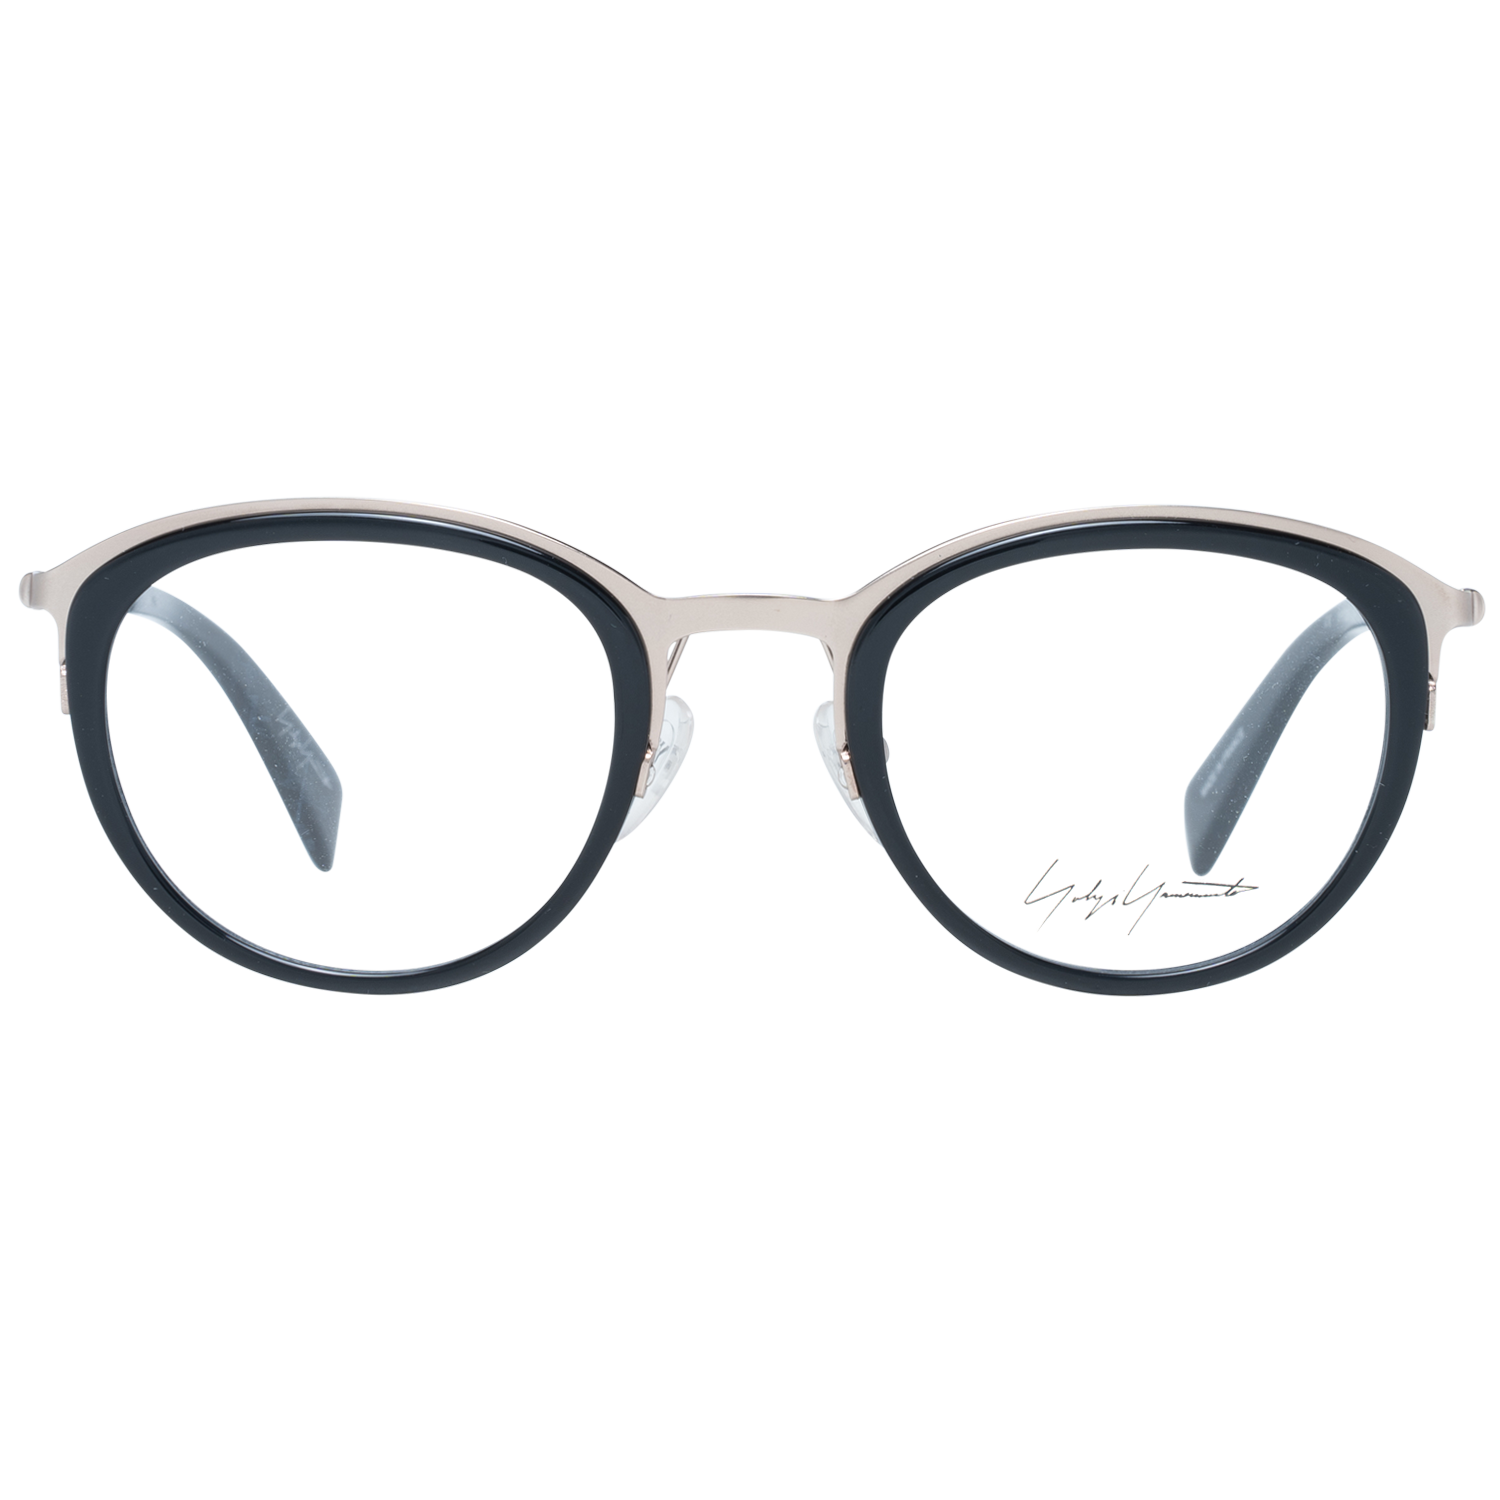 Yohji Yamamoto Frames Yohji Yamamoto Optical Frame YY1023 001 48 Eyeglasses Eyewear UK USA Australia 